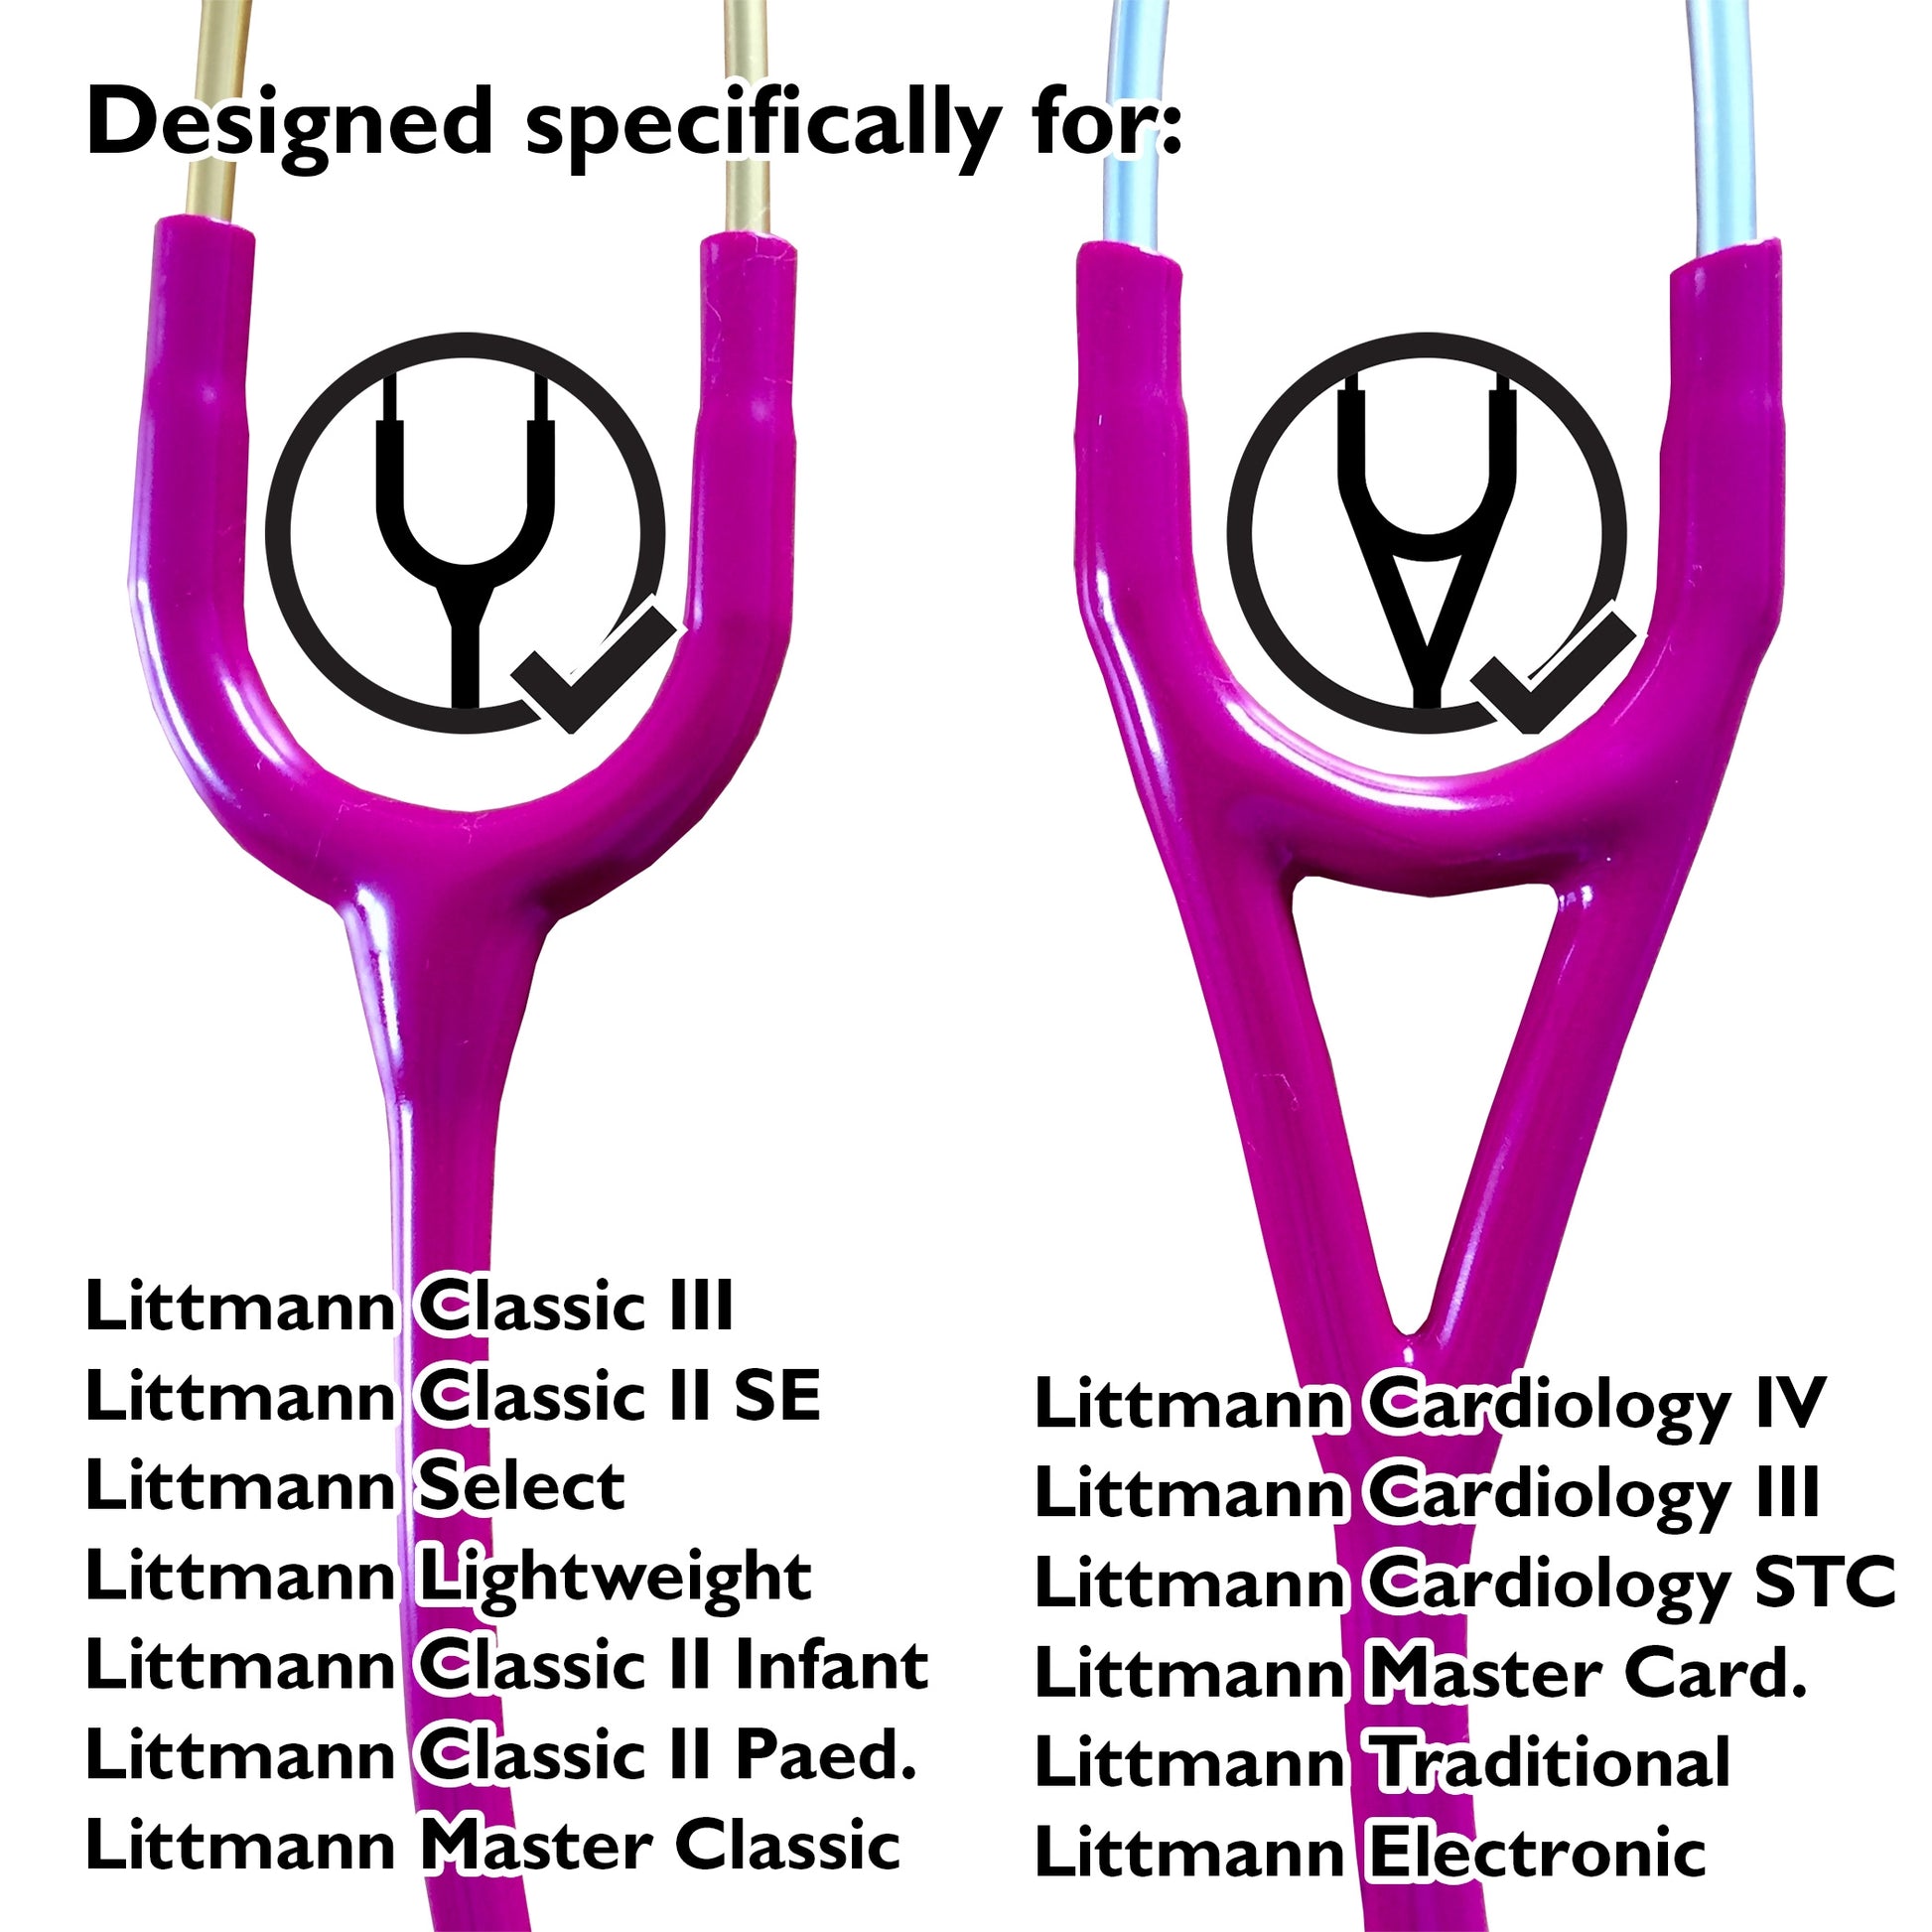 Pod Technical Cardiopod II Stethoscope Case for all Littmann Stethoscopes - Raspberry  Pod Technical Specialist Cases   